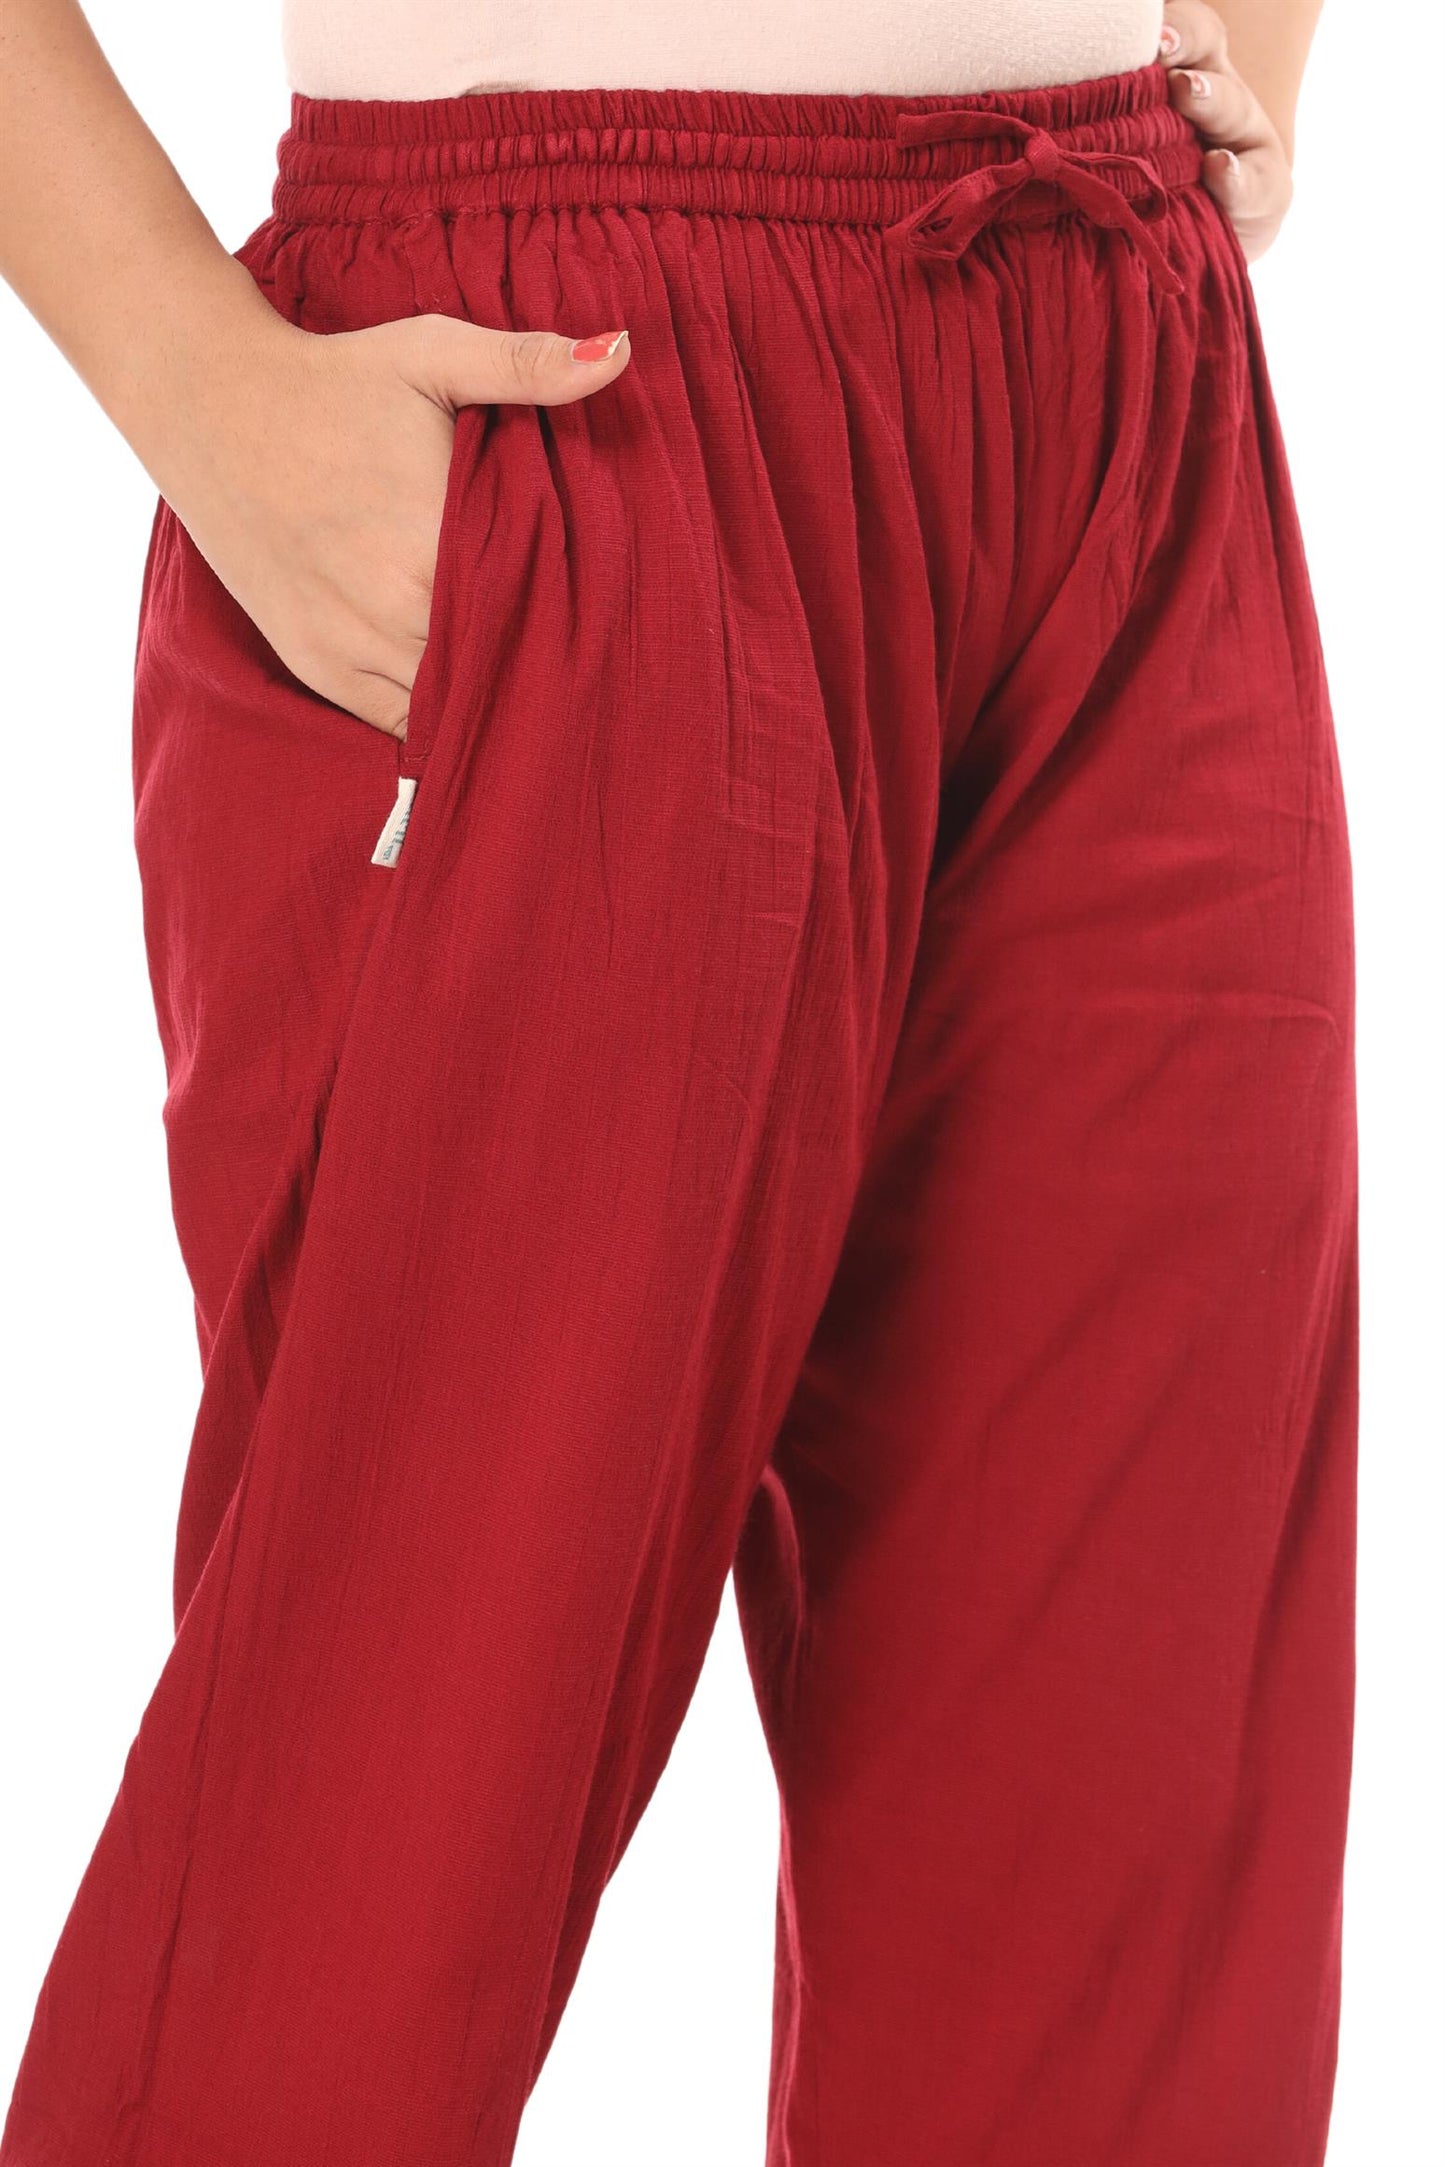 2-way stretch Maroon Cotton Lycra Pants